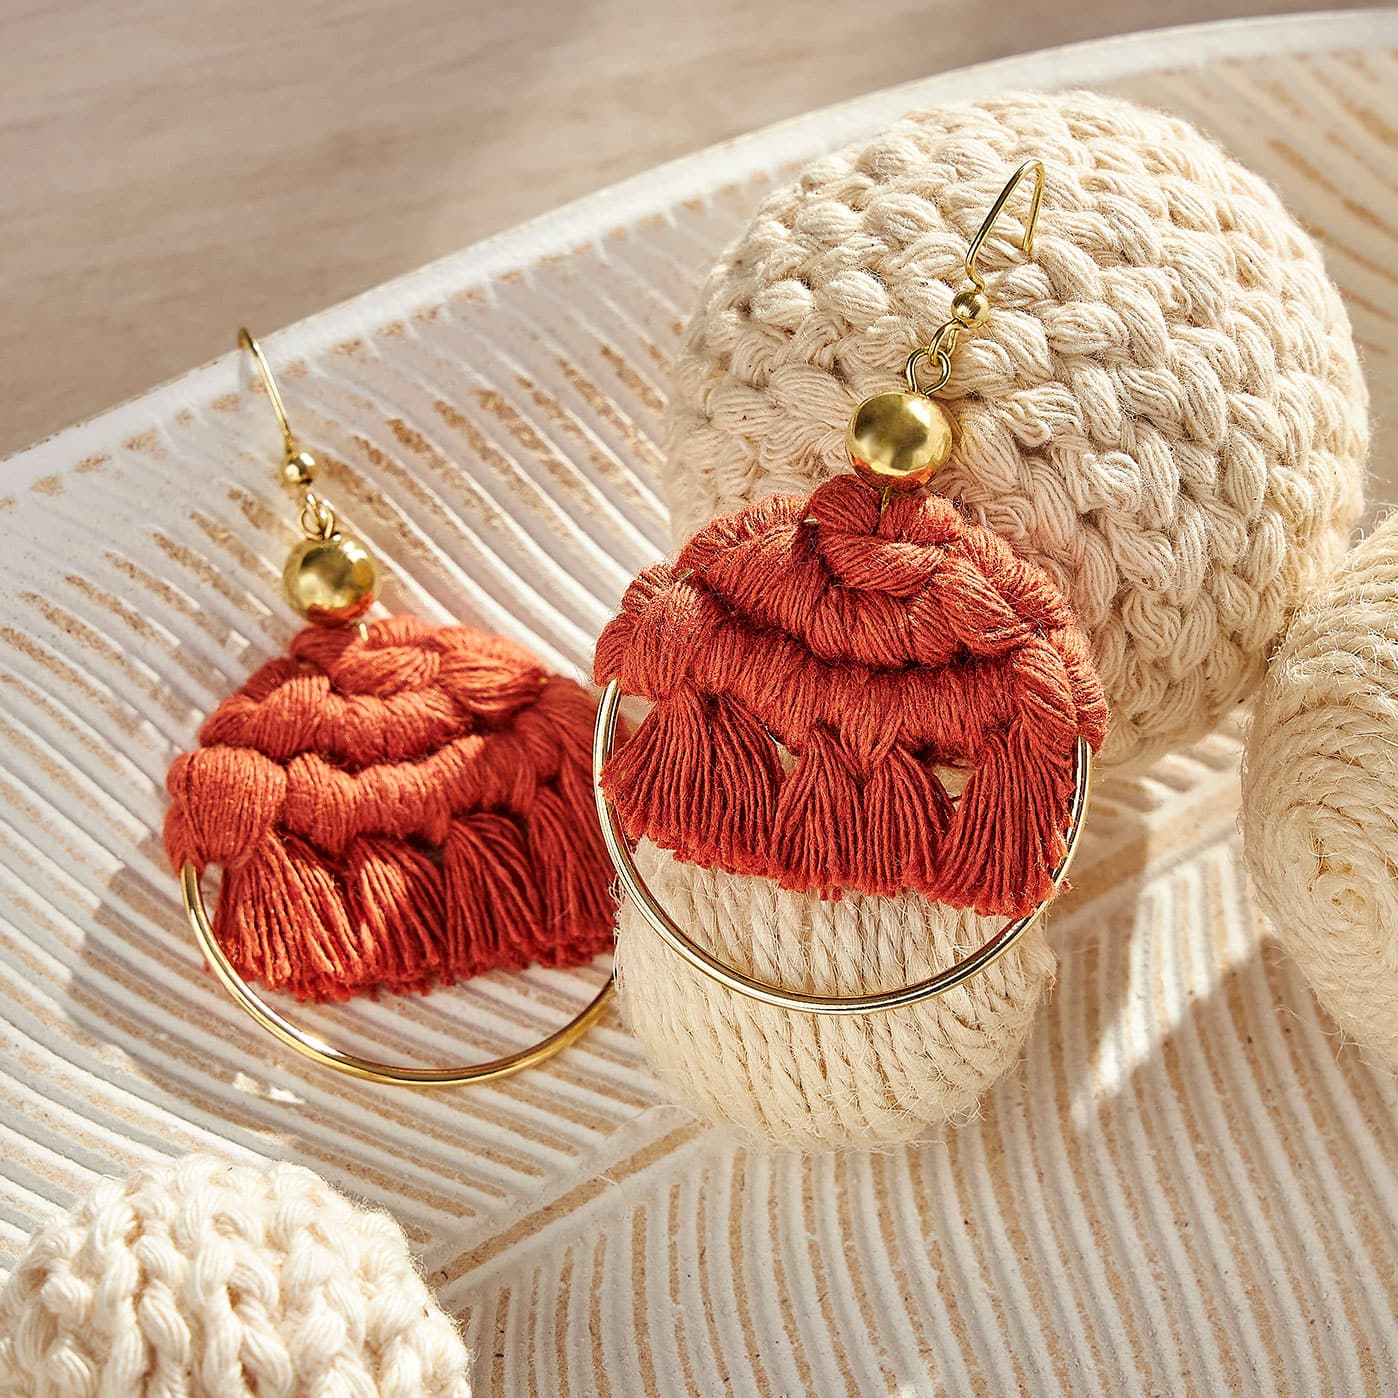 10mm Color Change Orange to Yellow Crochet Hooks, 3D Printed